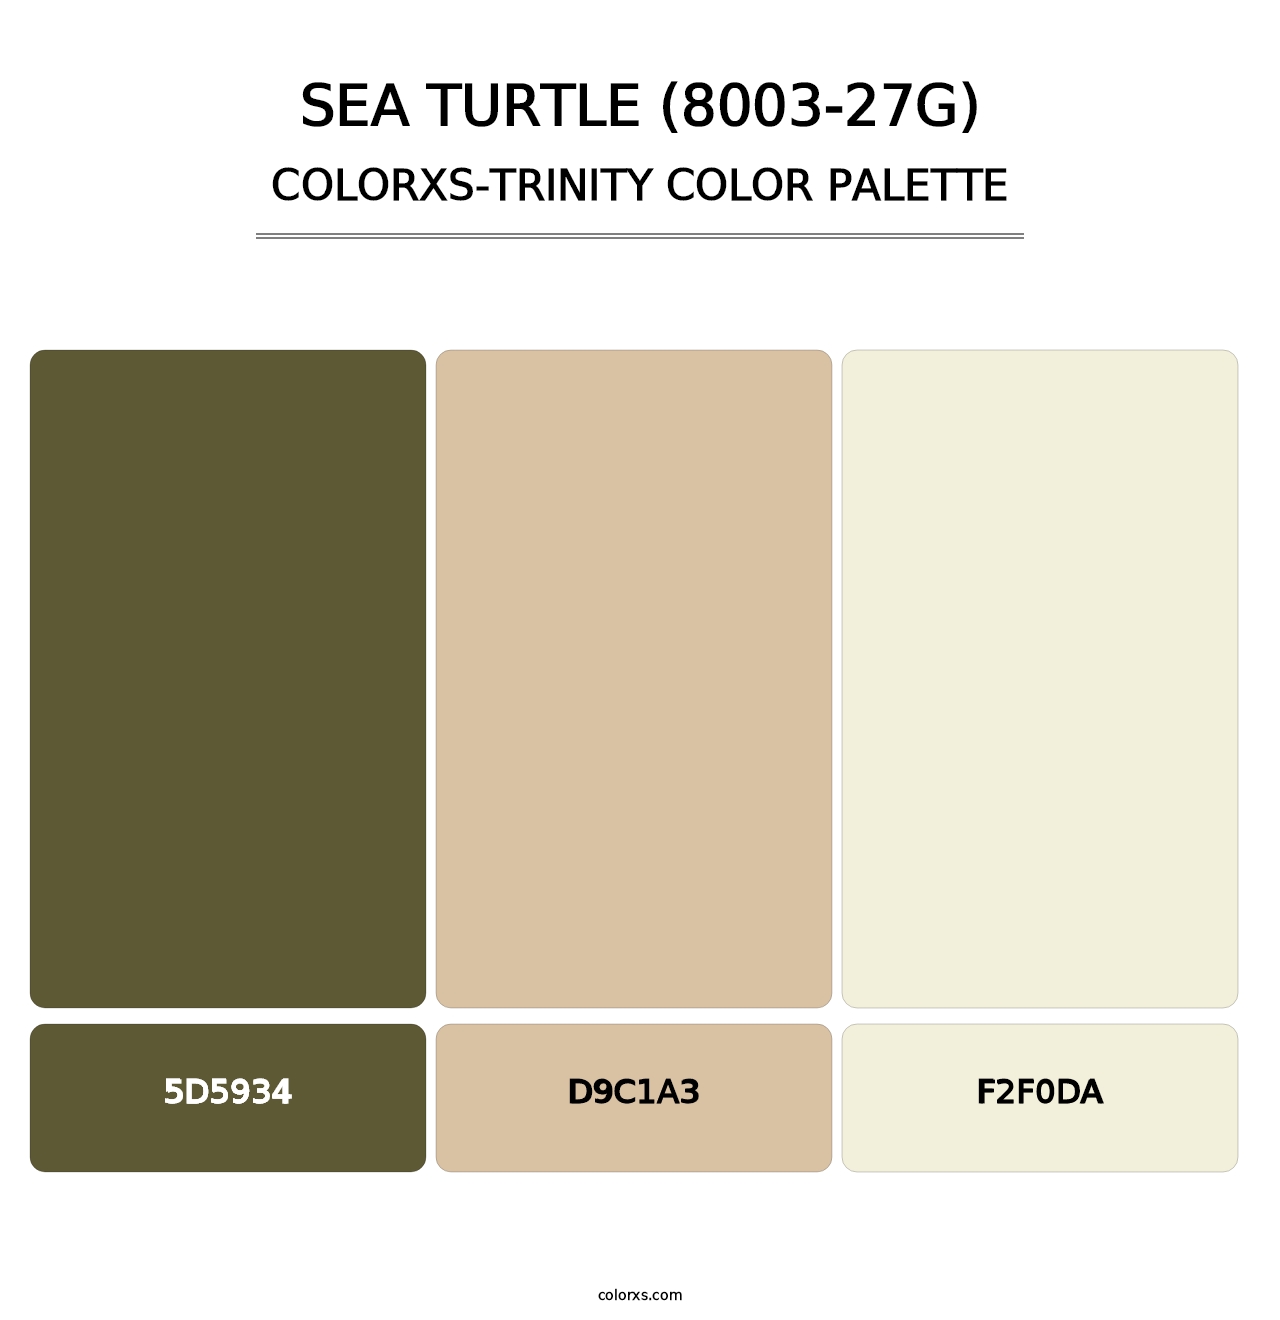 Sea Turtle (8003-27G) - Colorxs Trinity Palette